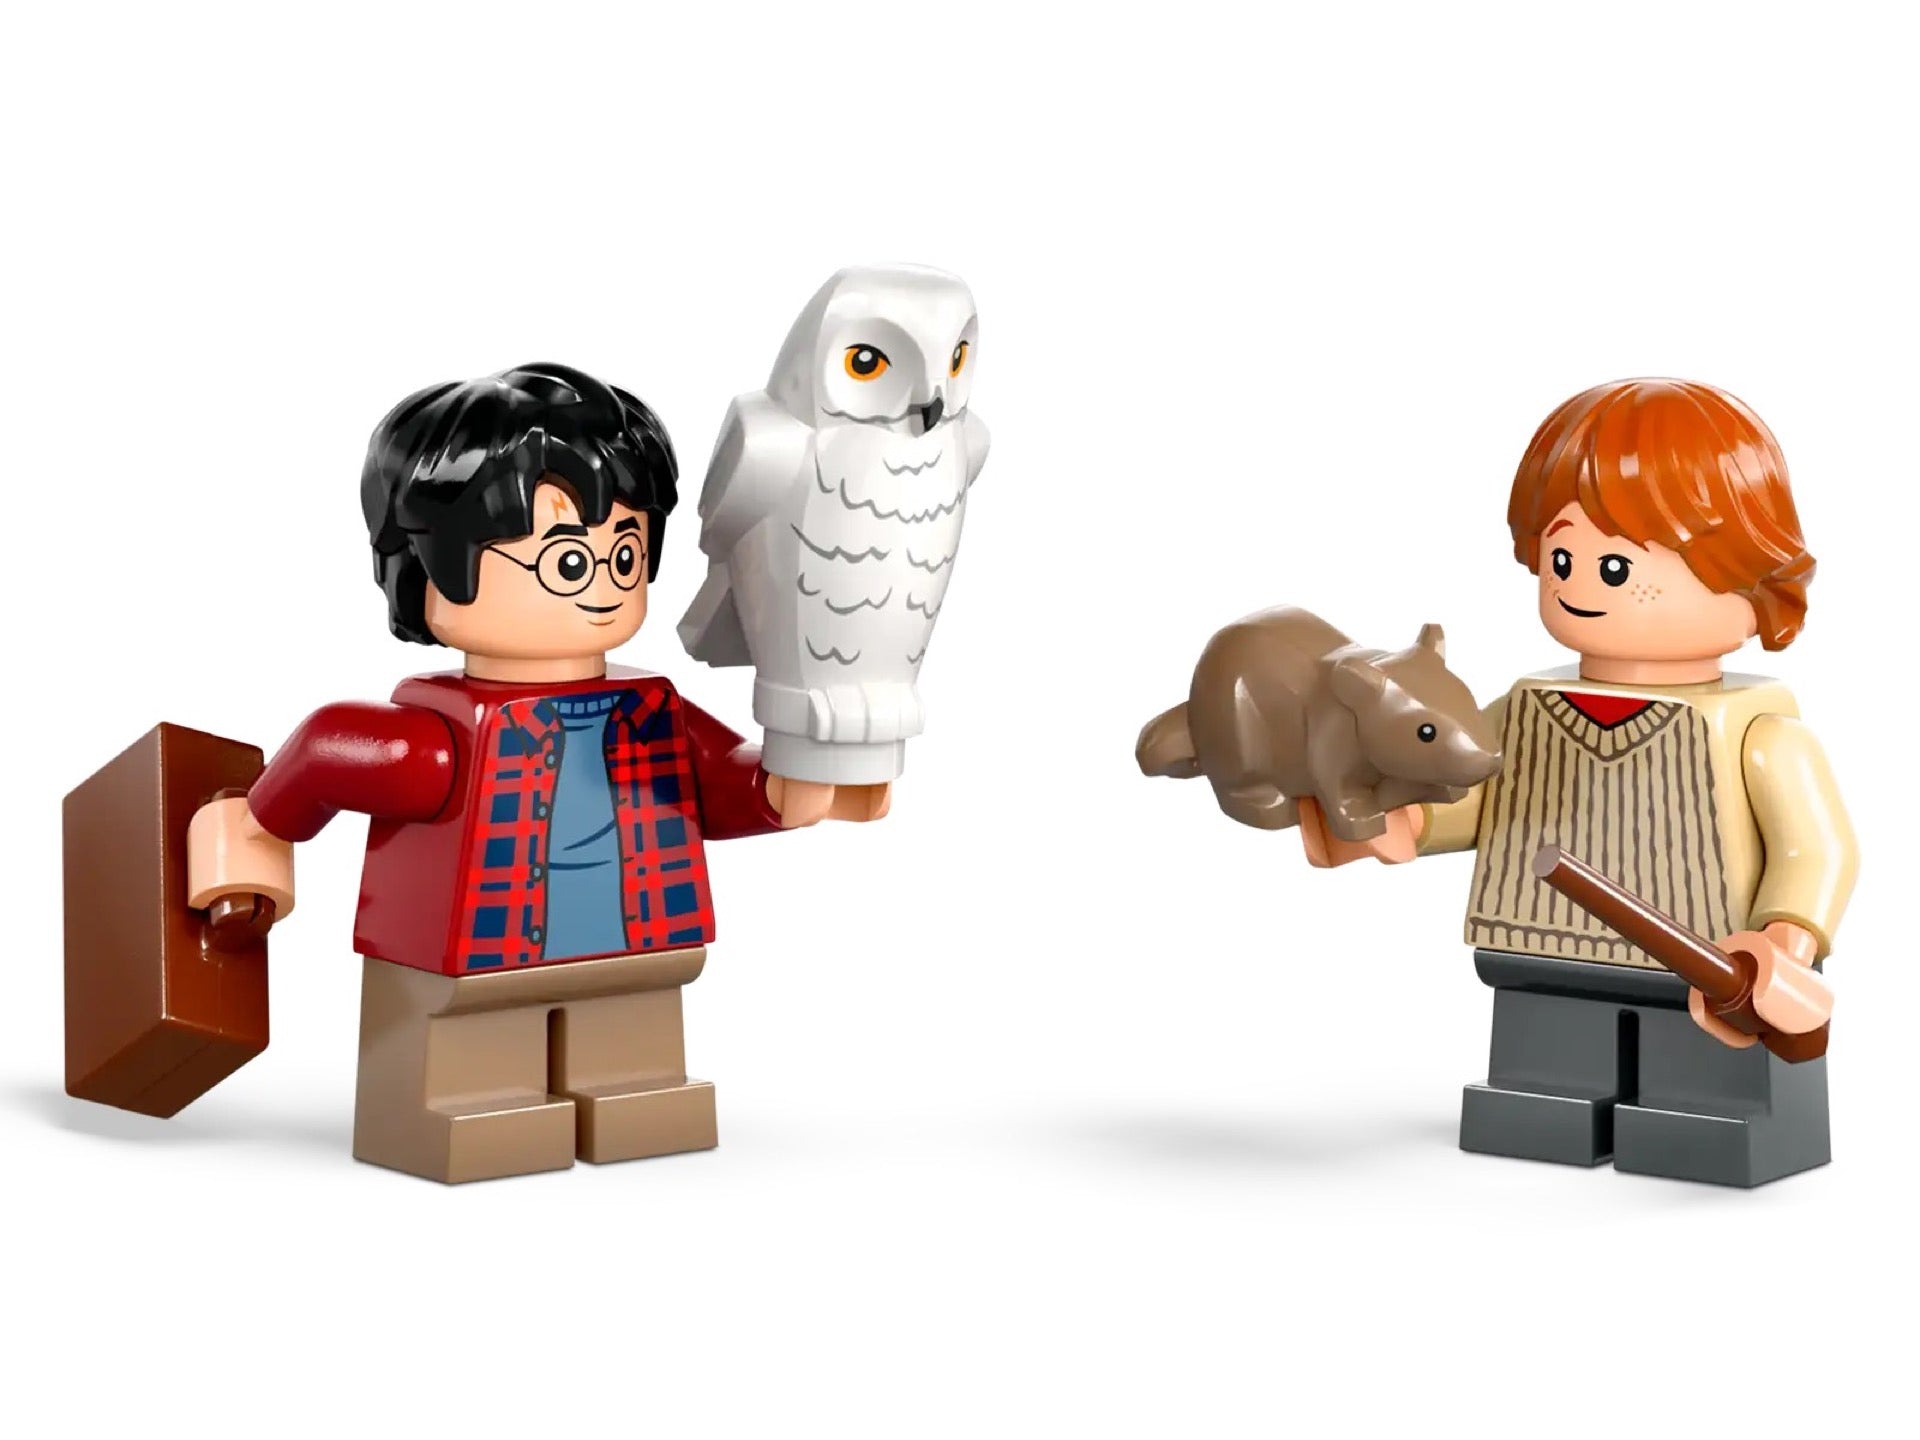 76424 LEGO Harry Potter Ford Anglia volante